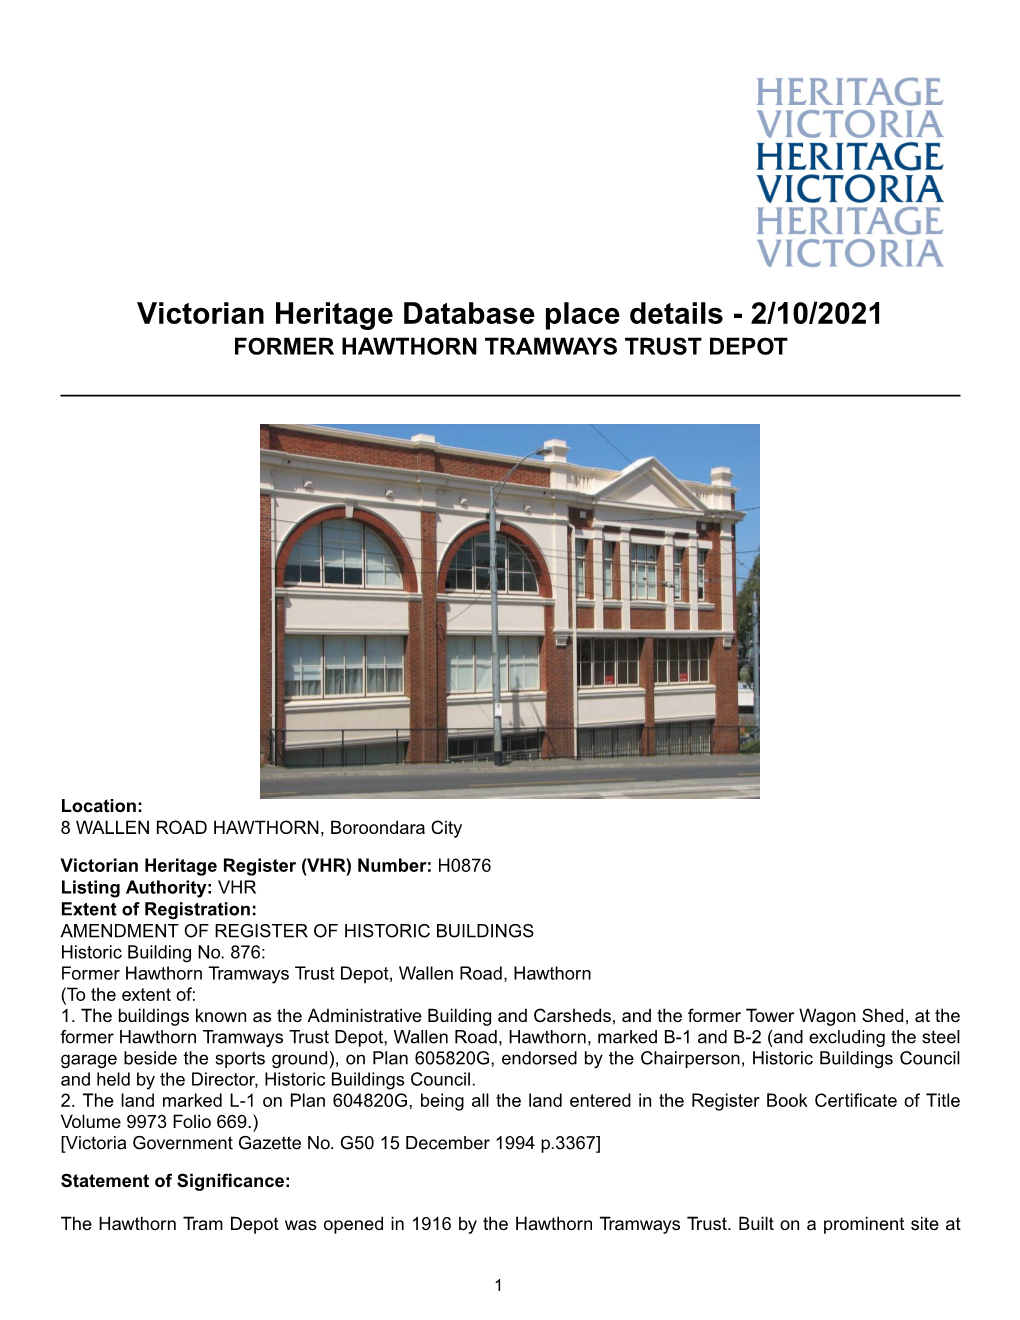 Victorian Heritage Database Place Details - 2/10/2021 FORMER HAWTHORN TRAMWAYS TRUST DEPOT